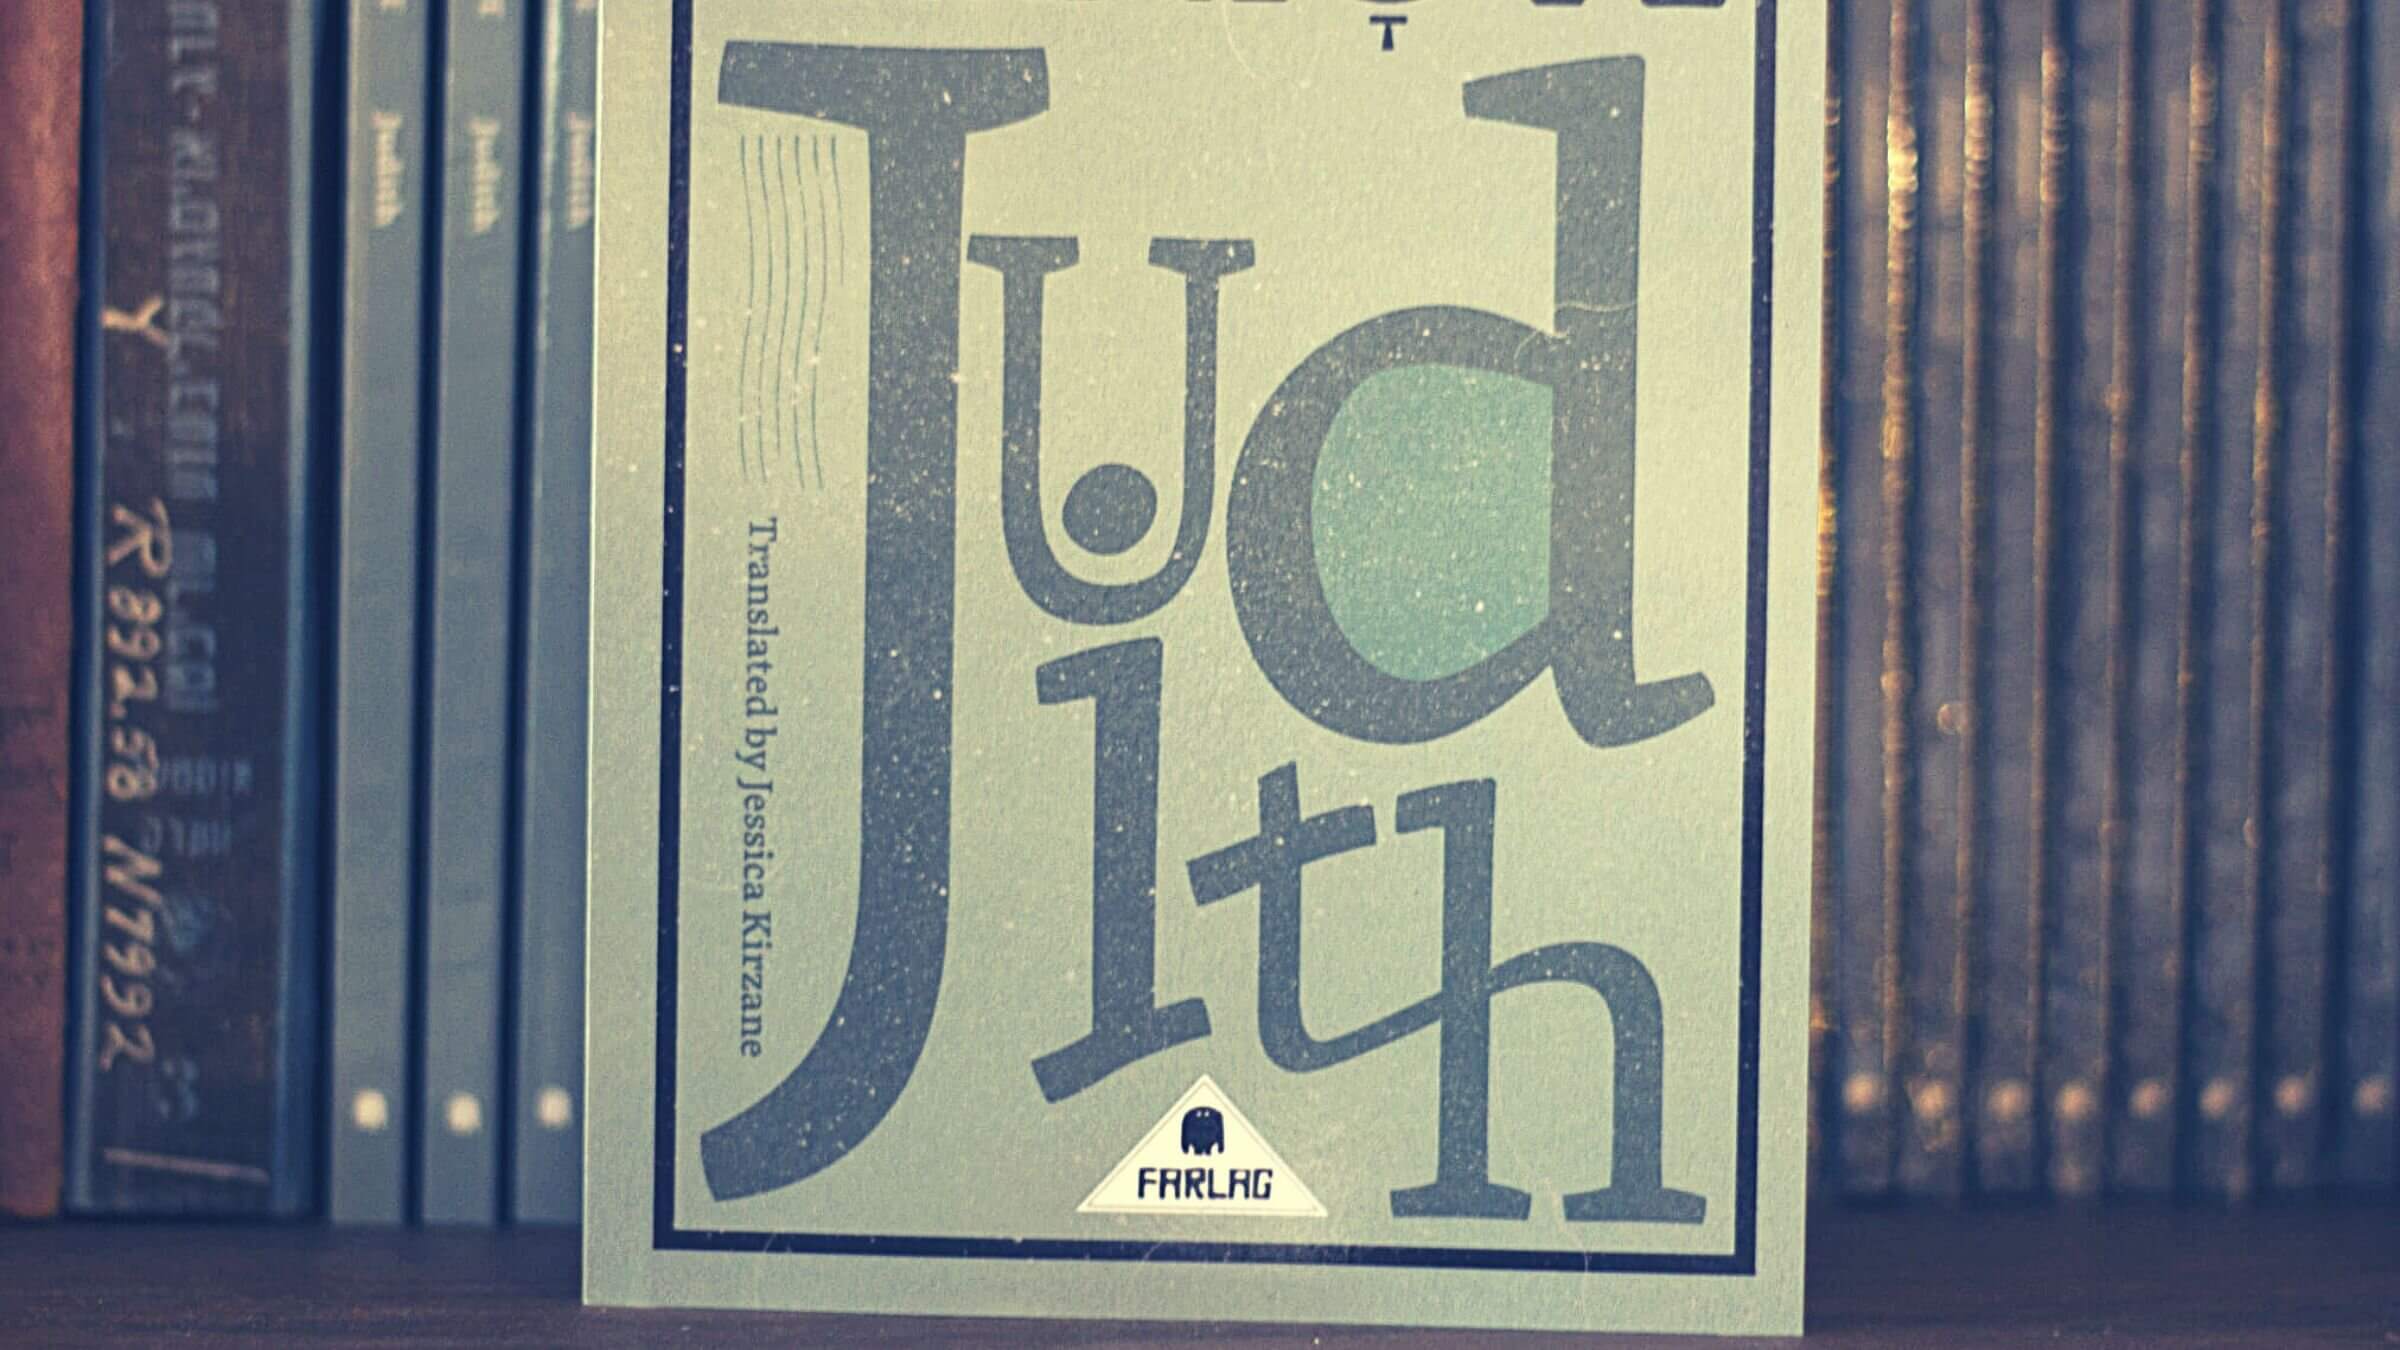 "Judith" by Miriam Karpilove, translated by Jessica Kirzane, published by Farlag Press.